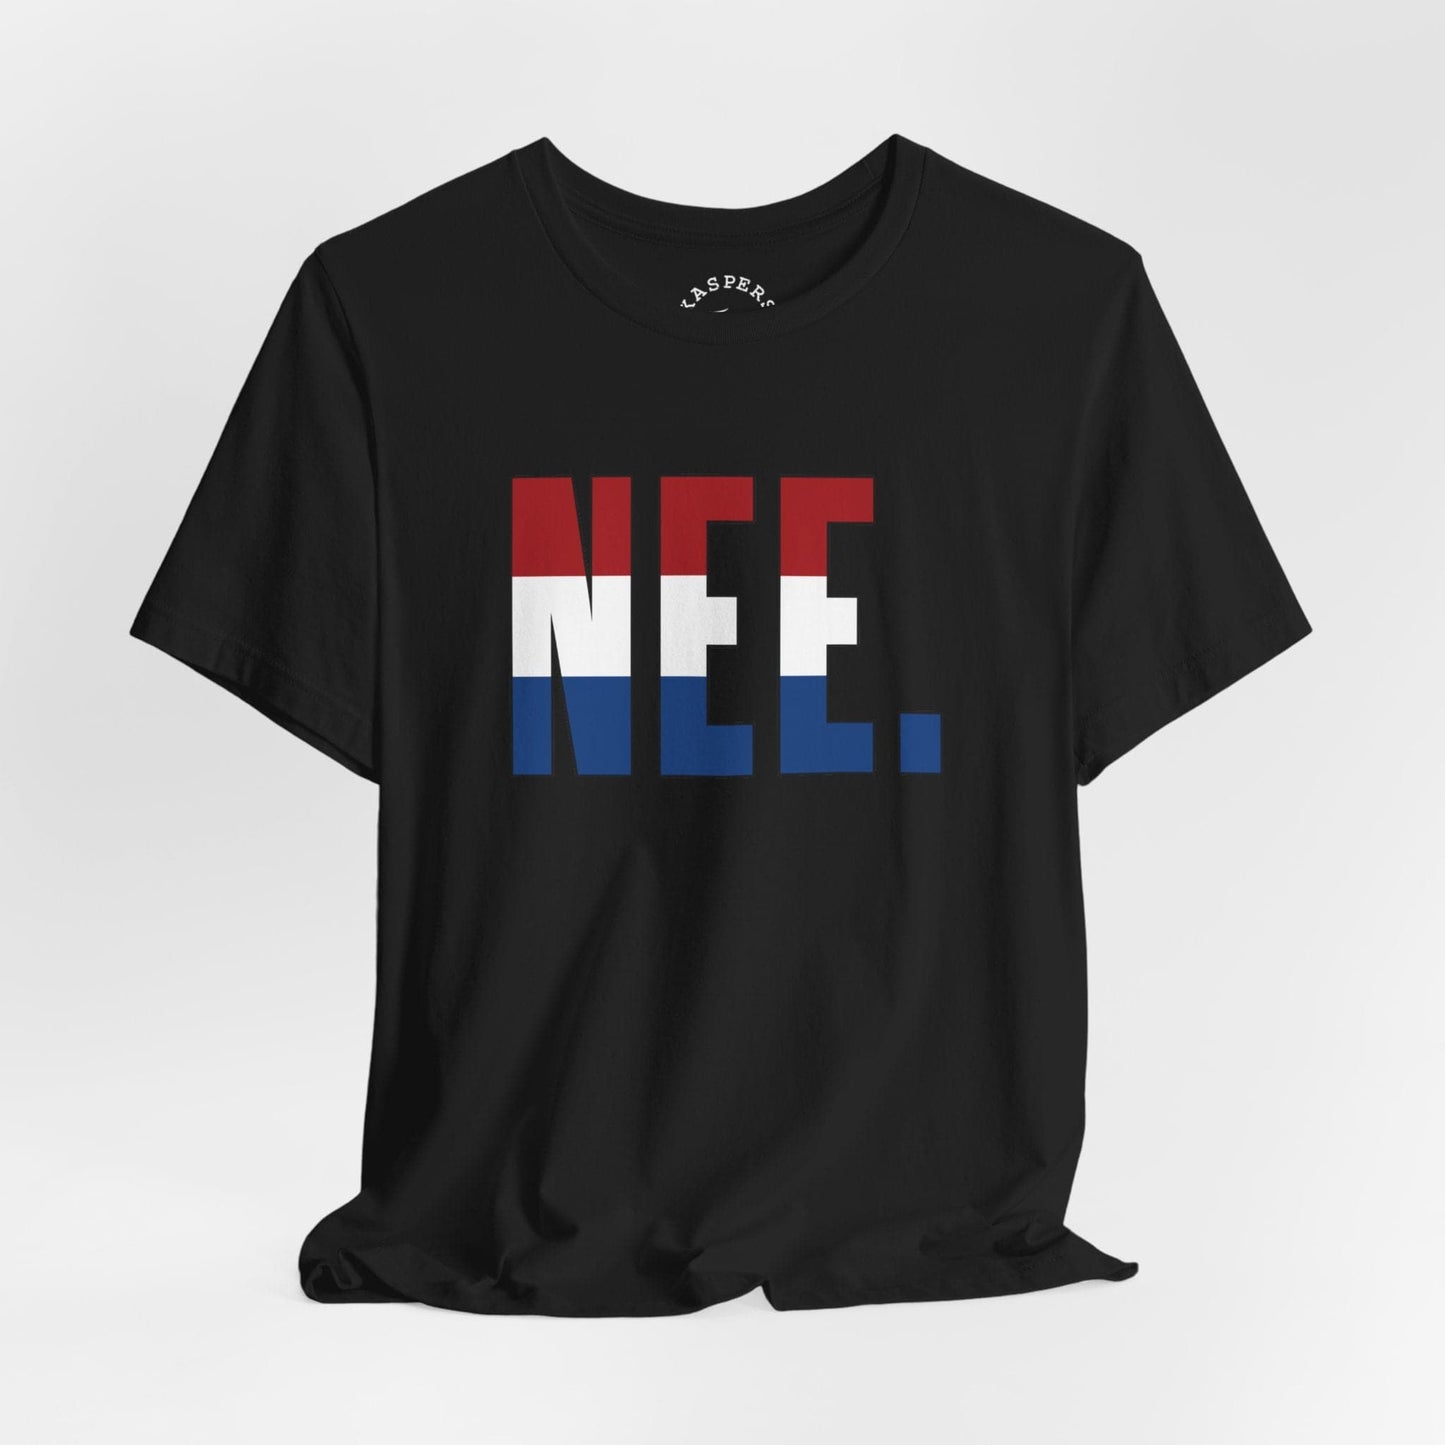 NEE. T-Shirt